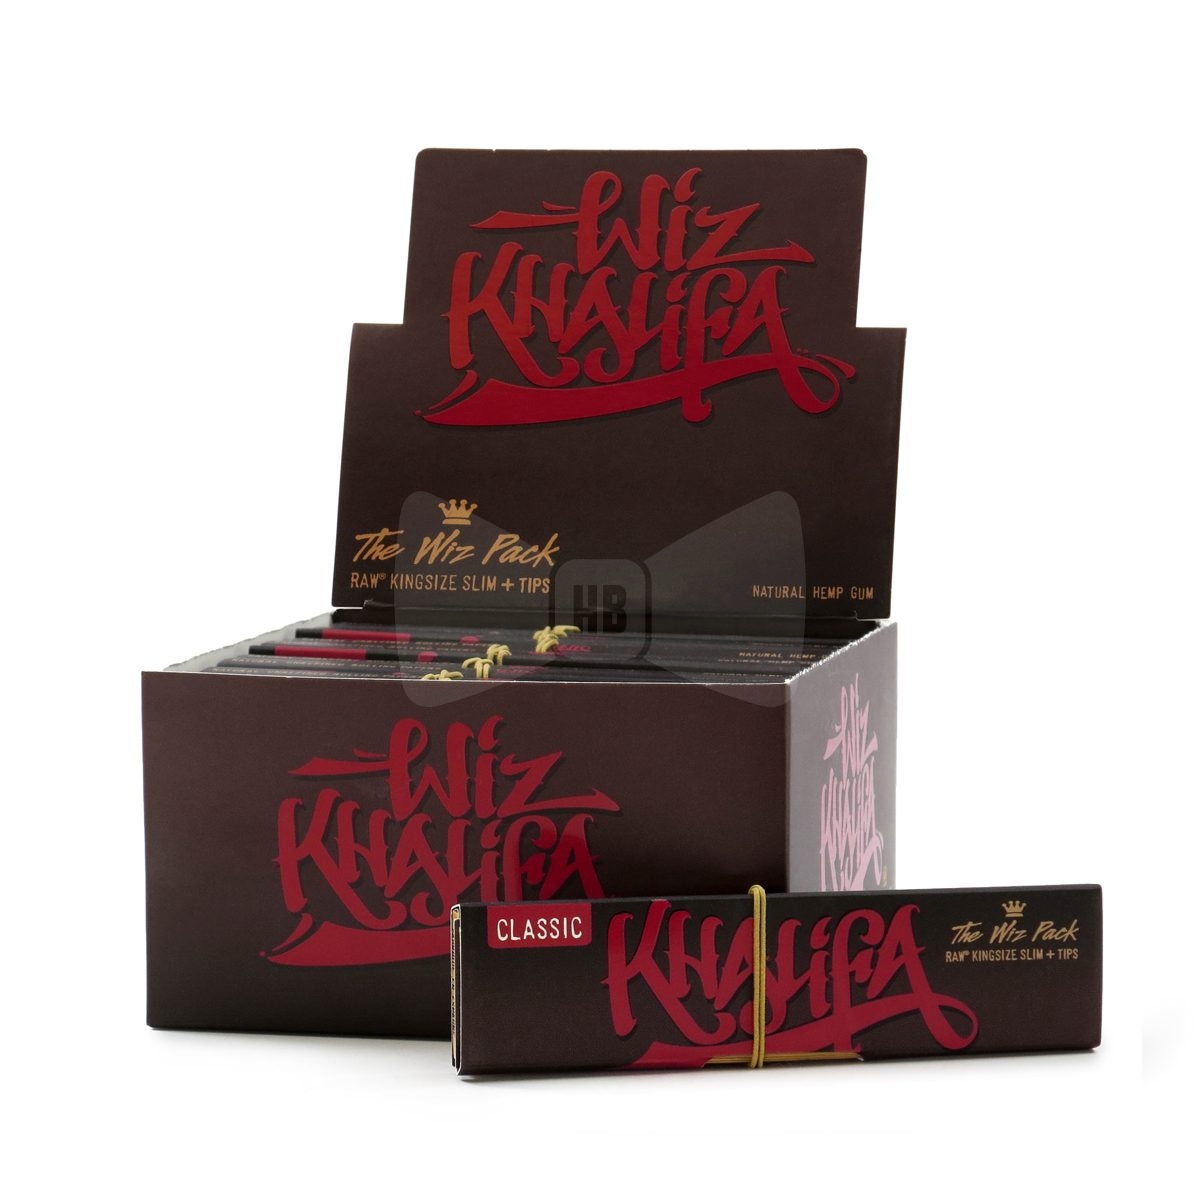 Wiz Khalifa Raw King Size Slim with Tips 1 Pack